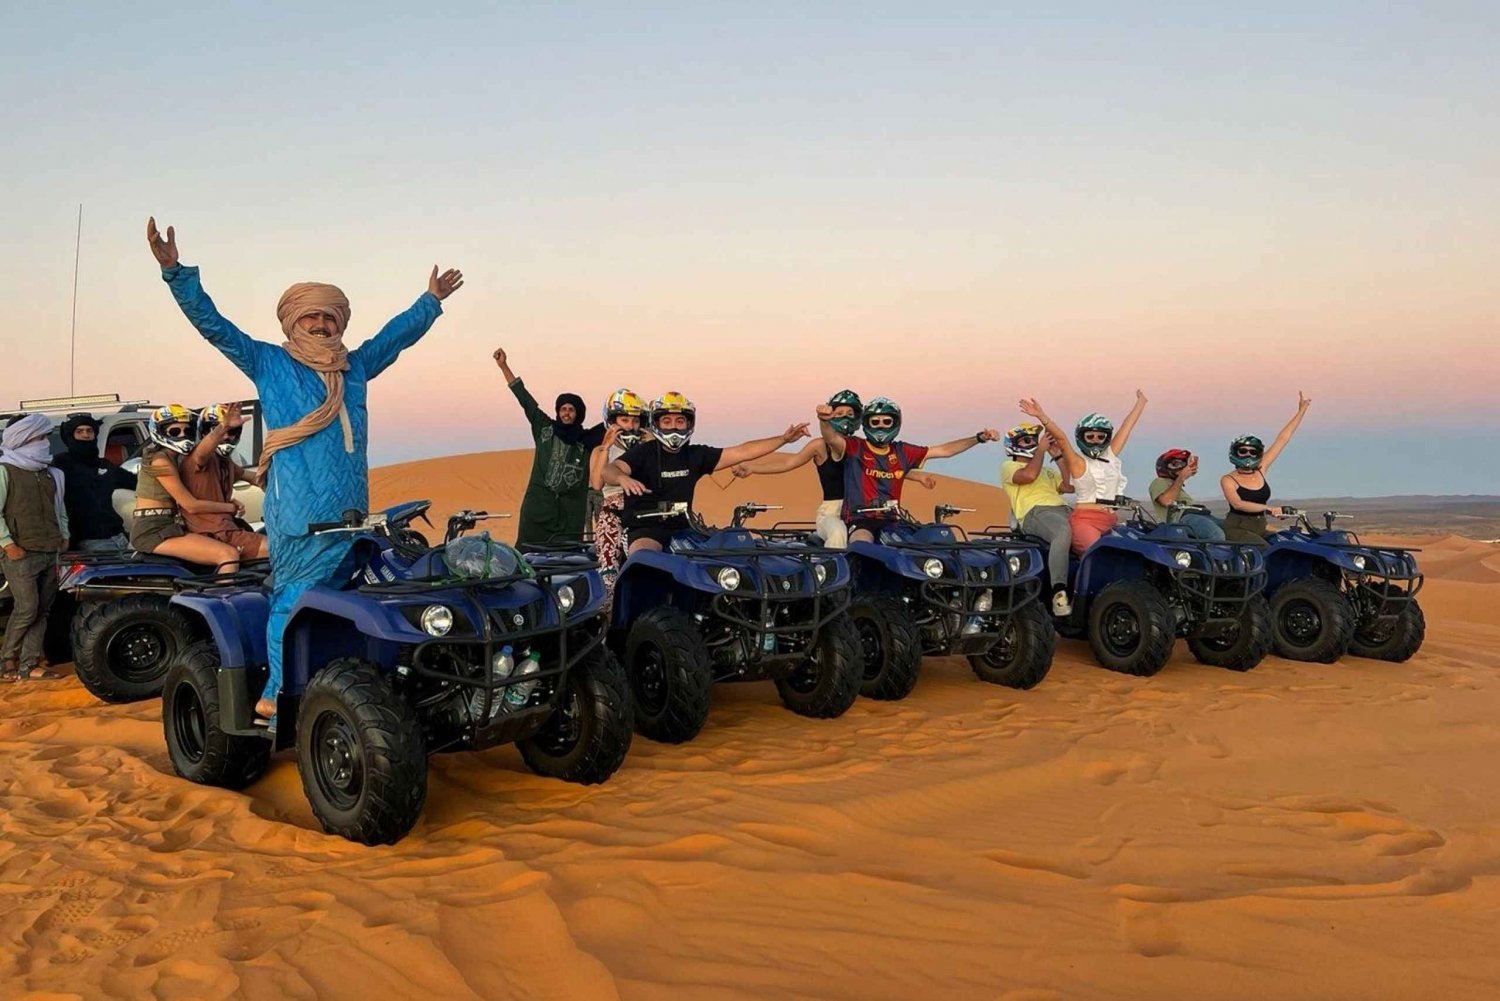 From Marrakech: Private Tour 2-Day To Desert Merzouga